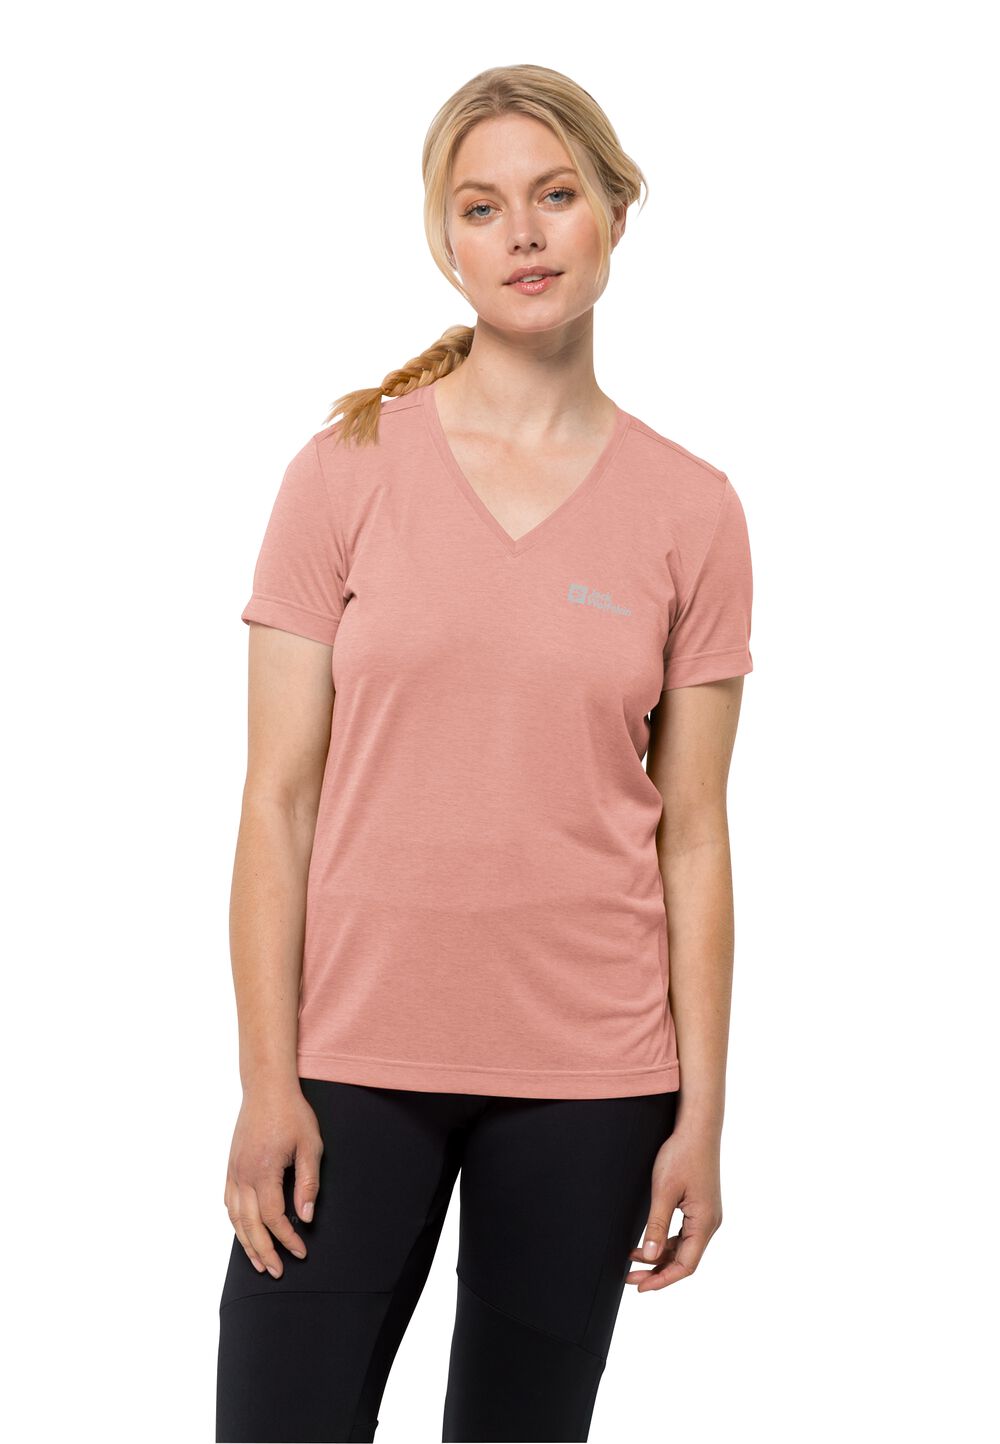 Jack Wolfskin Crosstrail T-Shirt Women Functioneel shirt Dames L bruin rose dawn